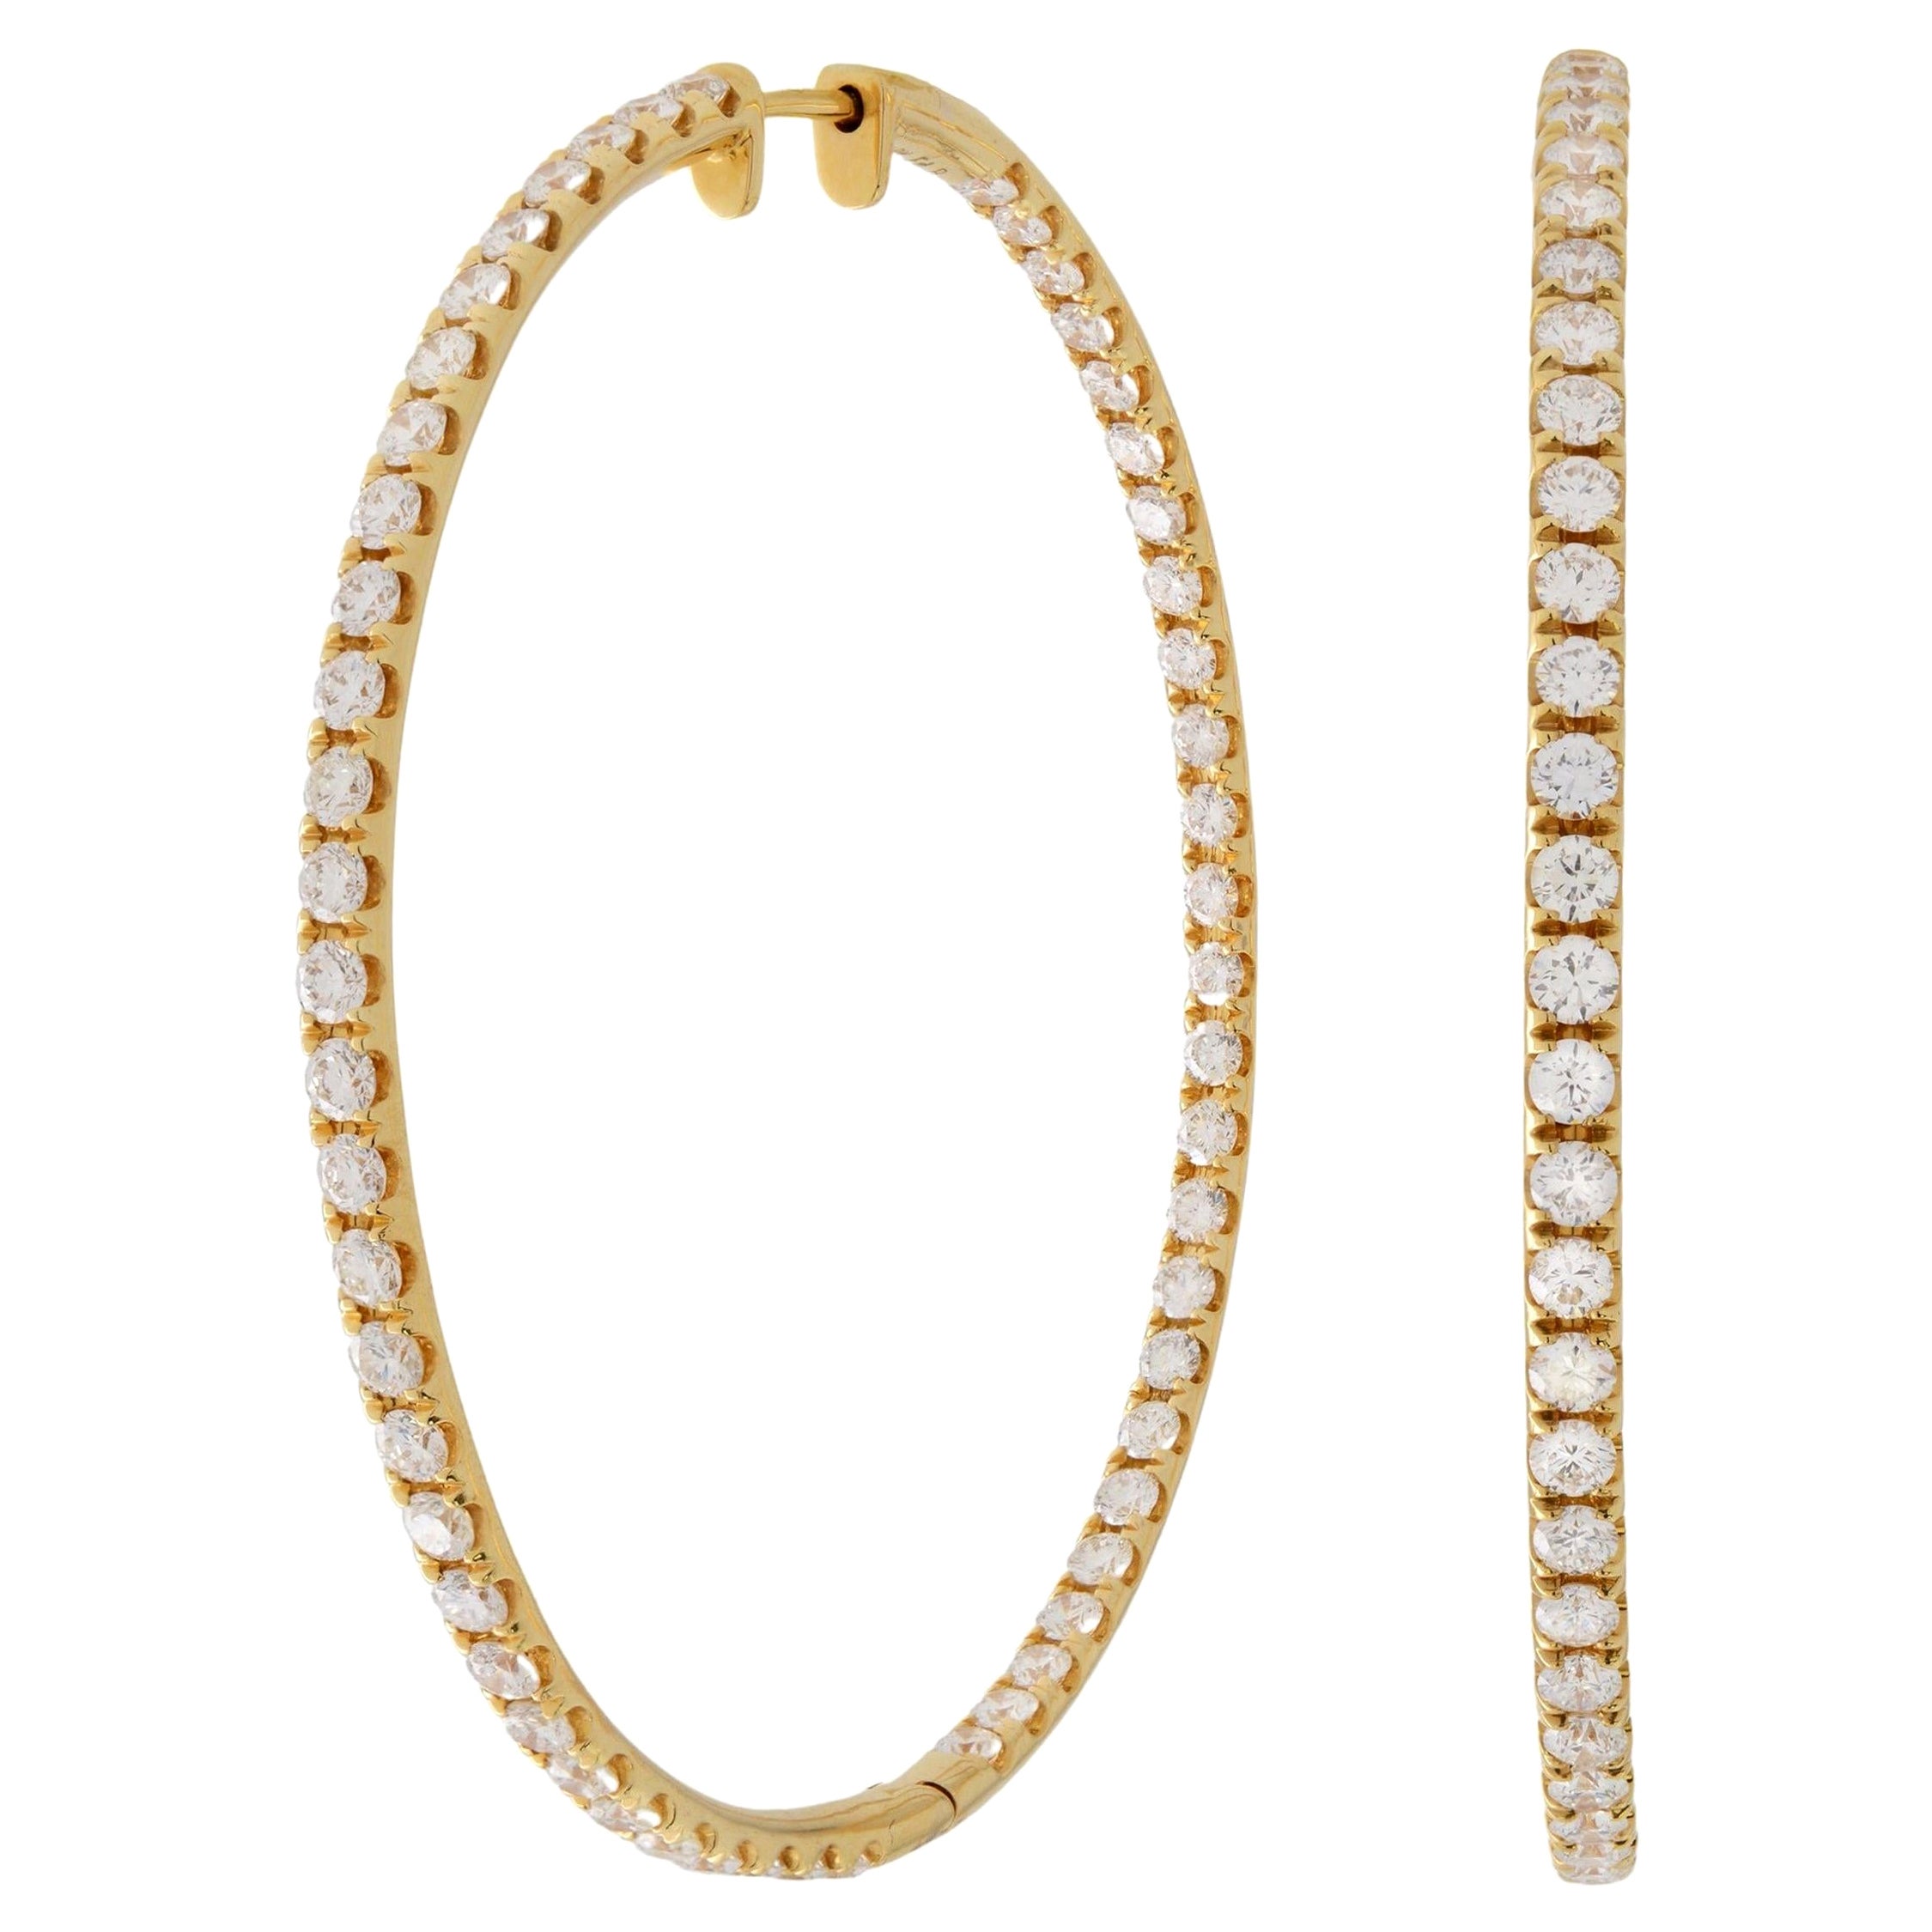 Rachel Koen 18 Karat Yellow Gold Pave Diamond Large Hoop Earrings 5.25 Carat